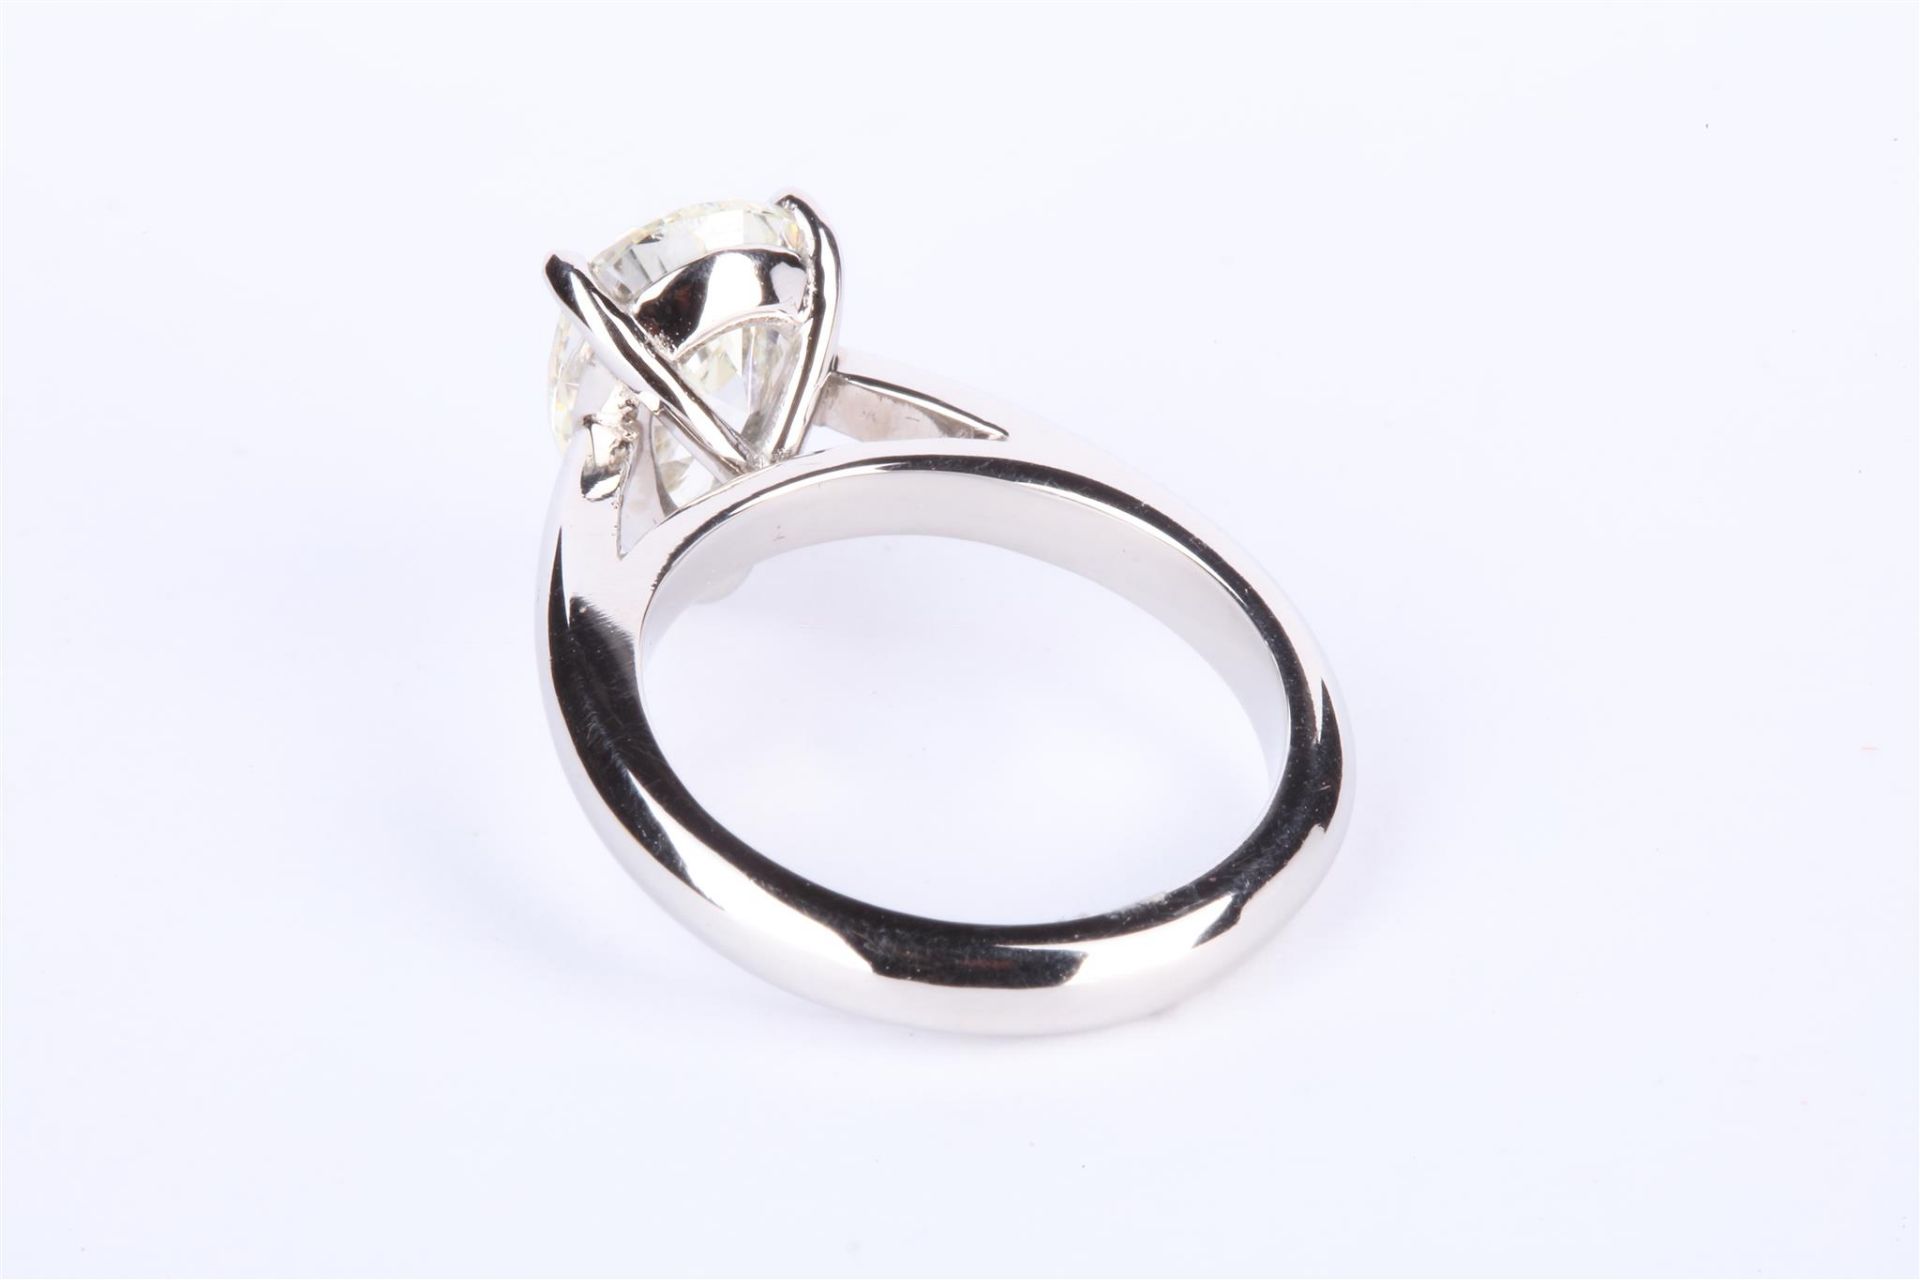 + VAT Stunning Ladies 18ct White Gold 3.28CT Tear Drop Diamond Ring (Heavy Mount) - Image 2 of 4